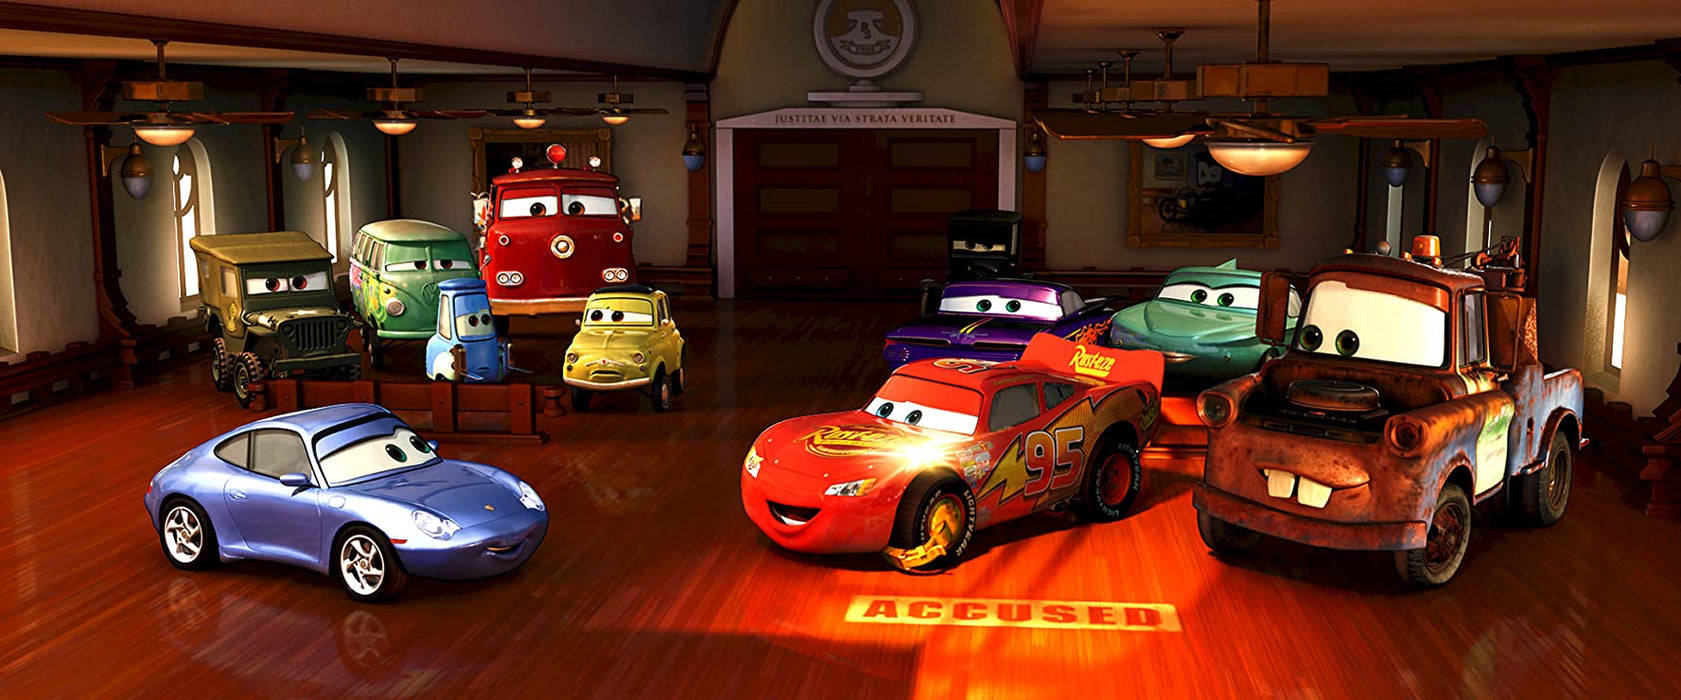 Disney Pixar's Cars - Limited Edition SteelBook [Blu-ray]